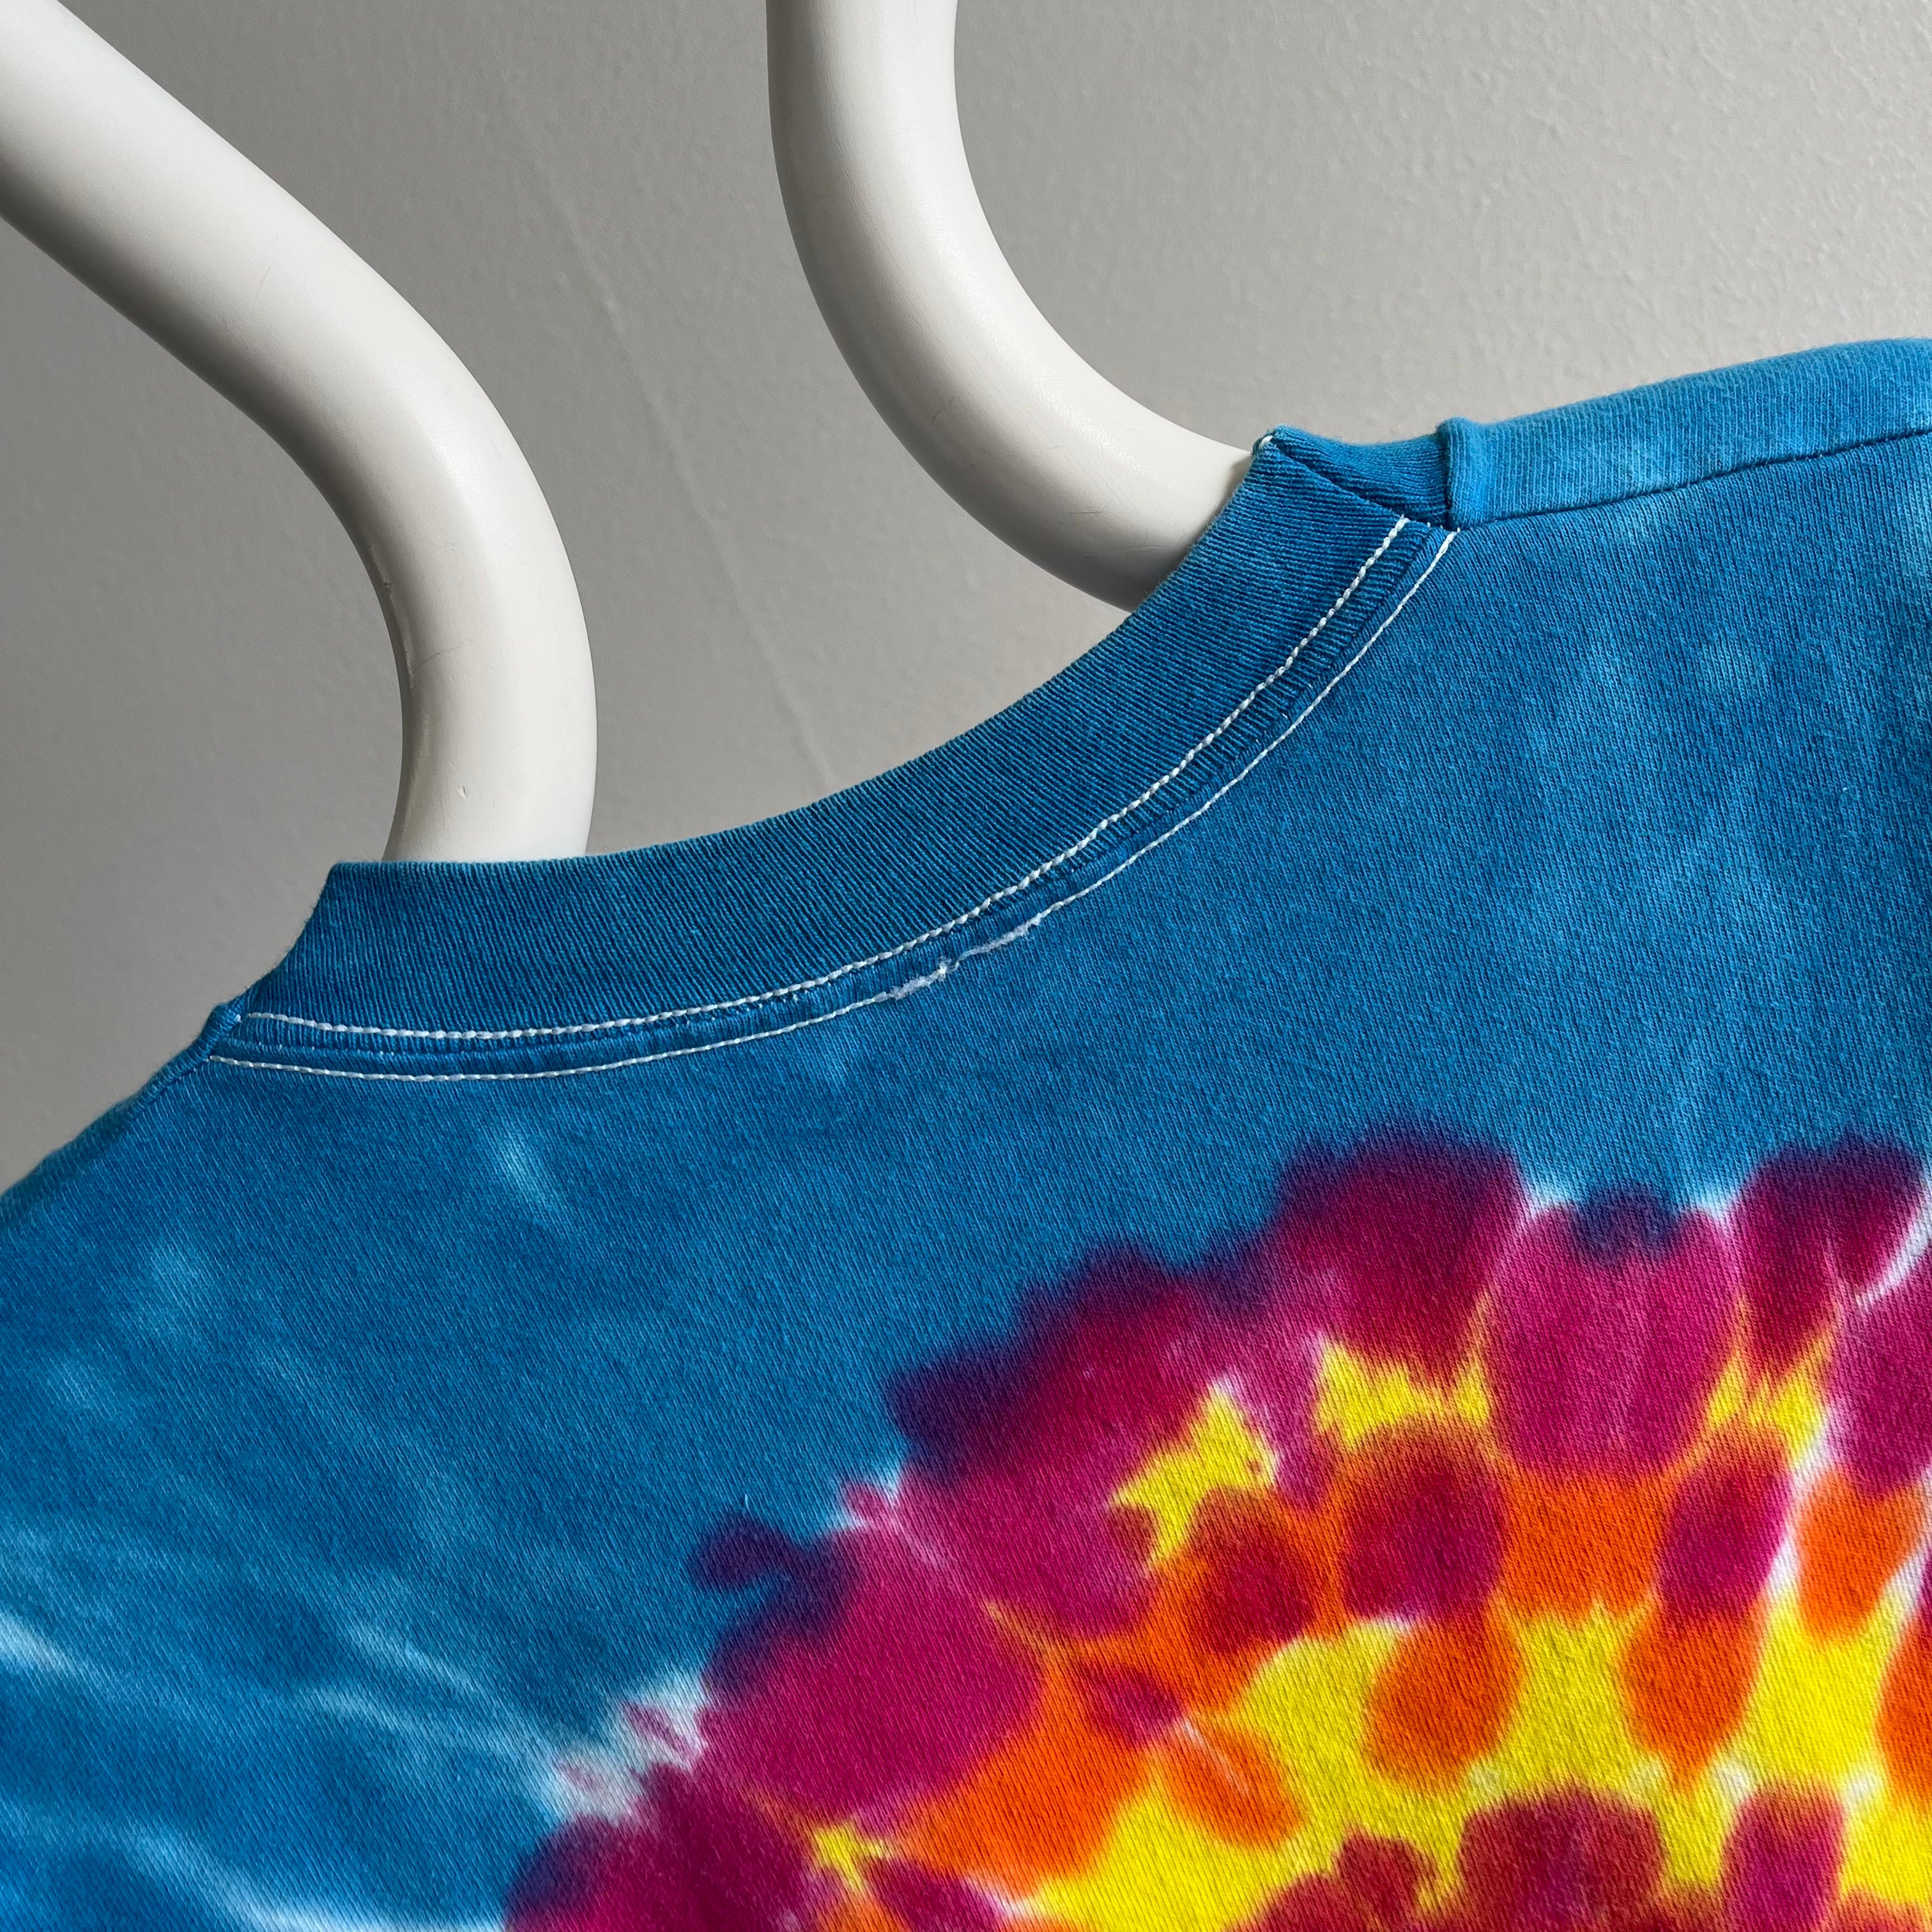 1980s Vibrant Tie Dye Single Stitch T-Shirt